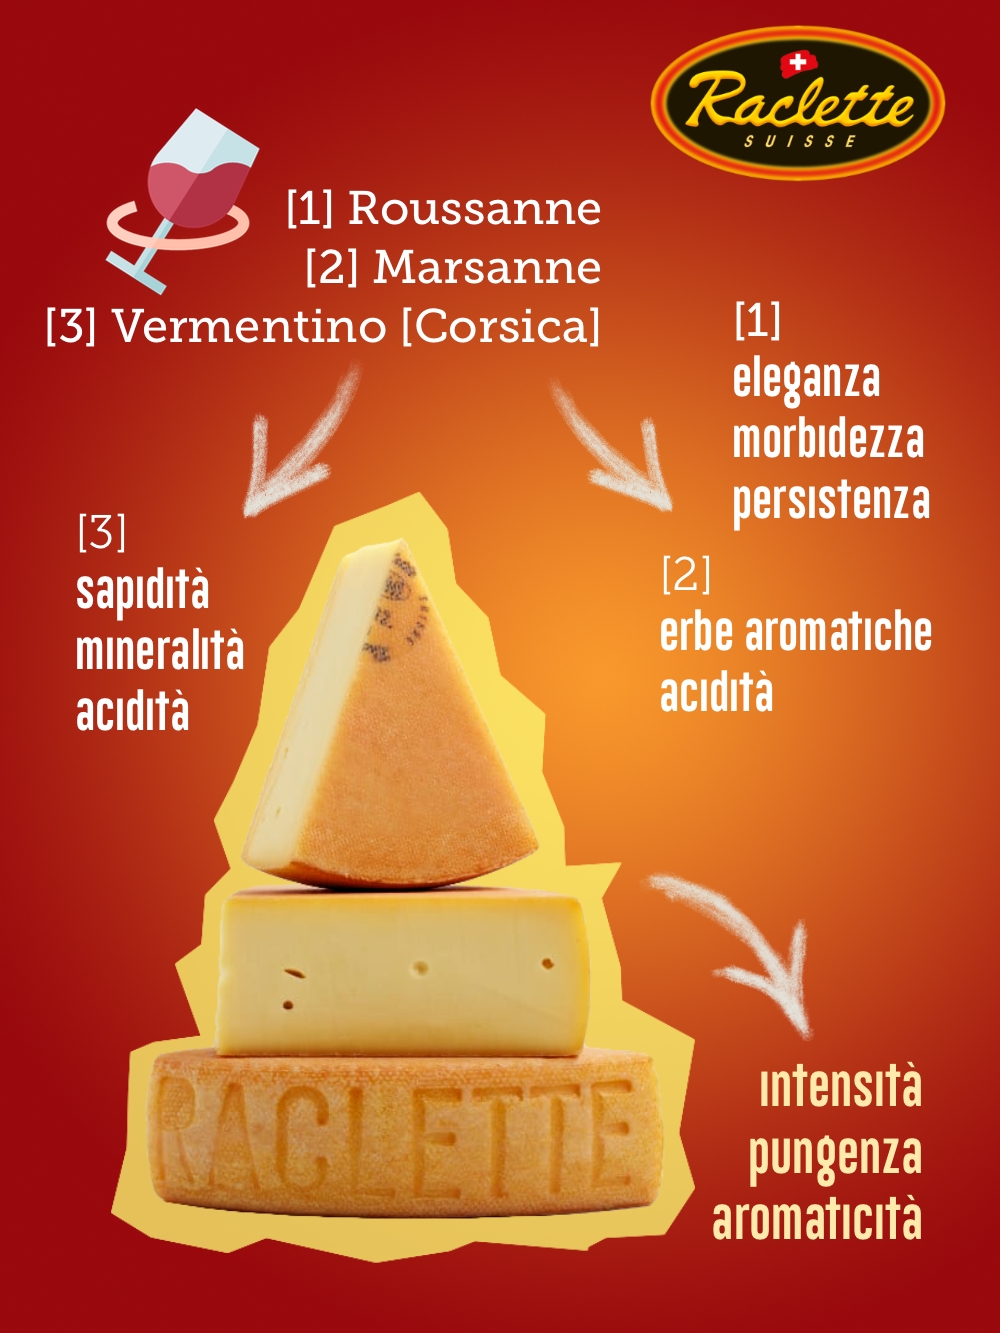 Style of Food #09 Raclette Suisse - Scheda abbinamenti Vino